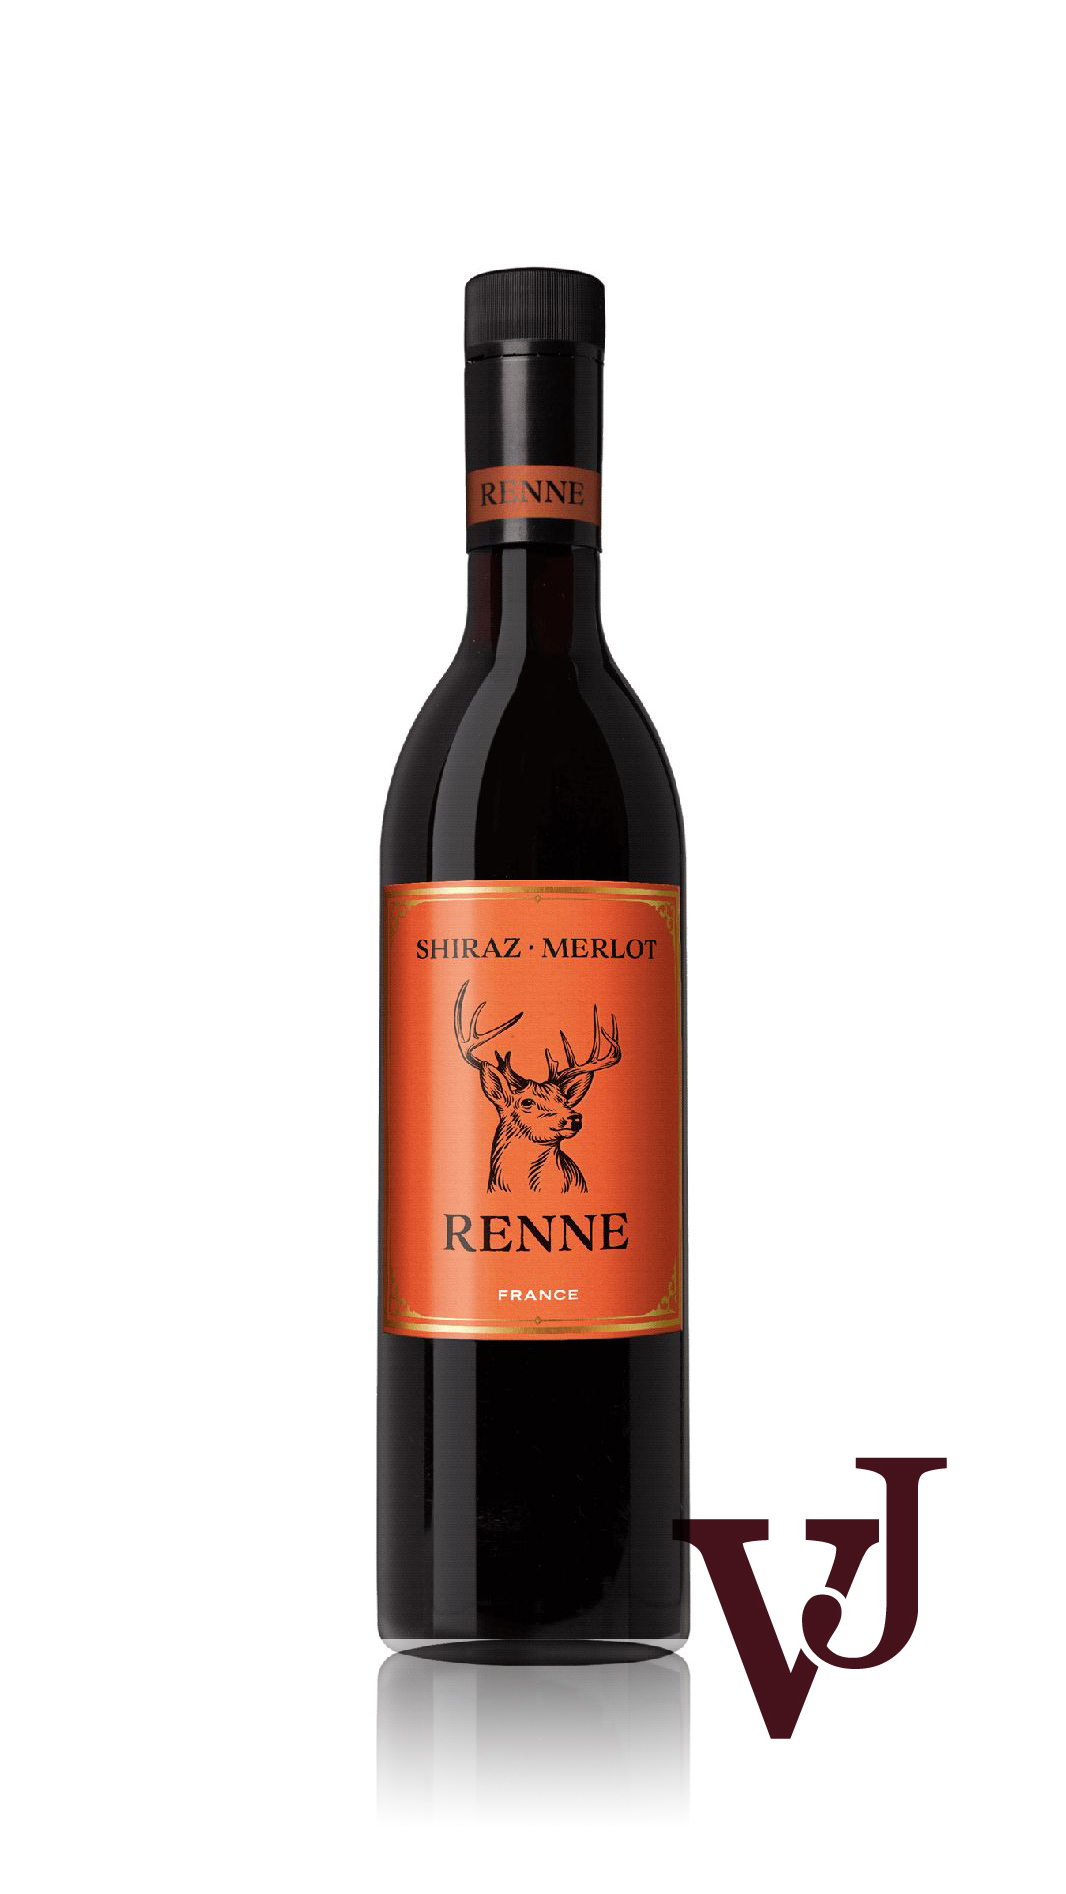 Rött Vin - Renne Shiraz Merlot artikel nummer 213201 från producenten Domaine Galetis från området Frankrike - Vinjournalen.se